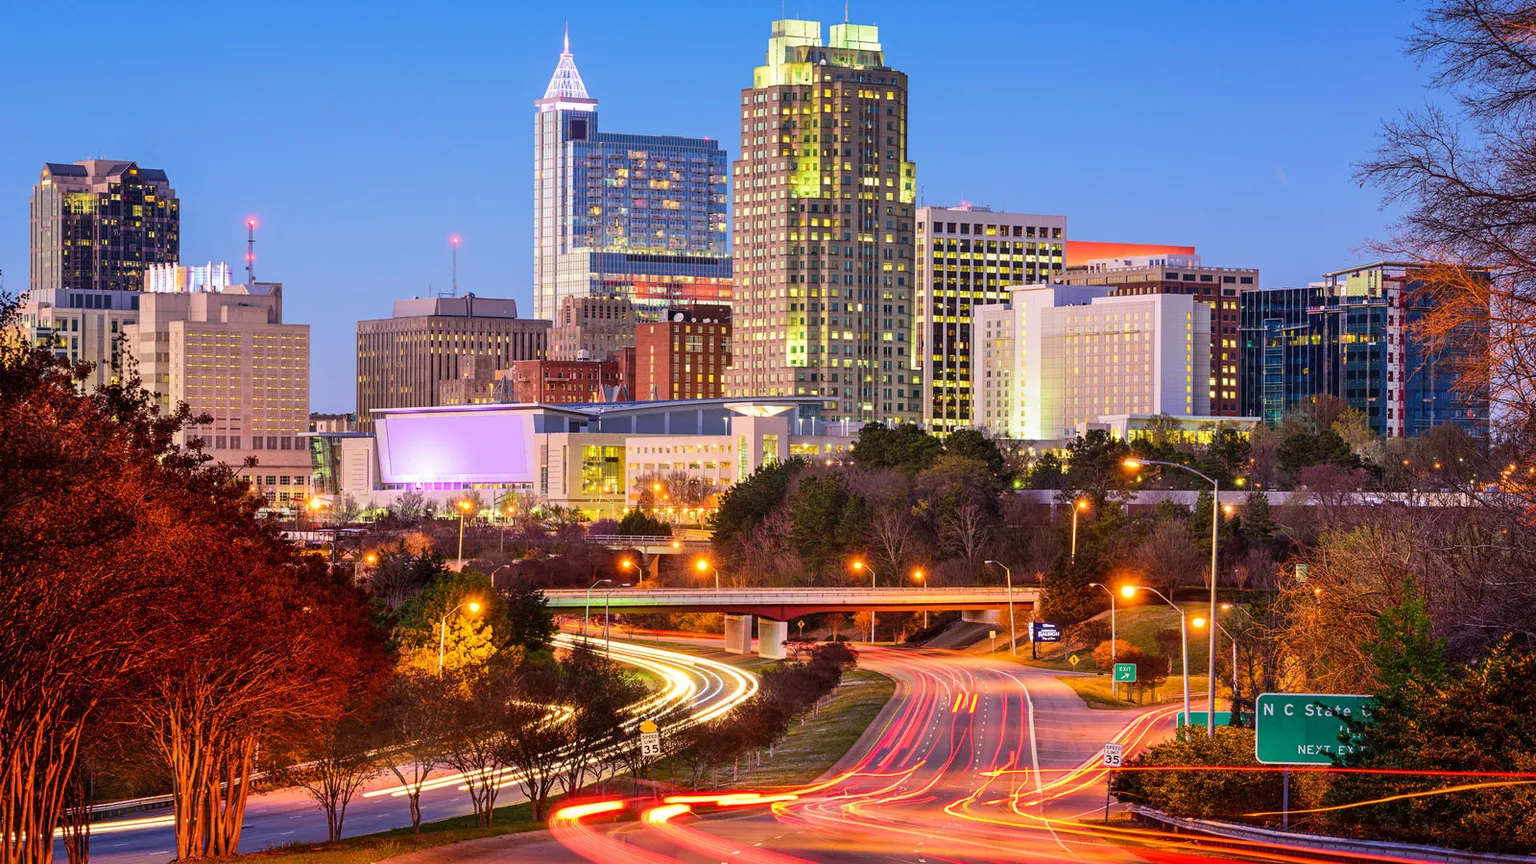 North Carolina. Image: Shutterstock